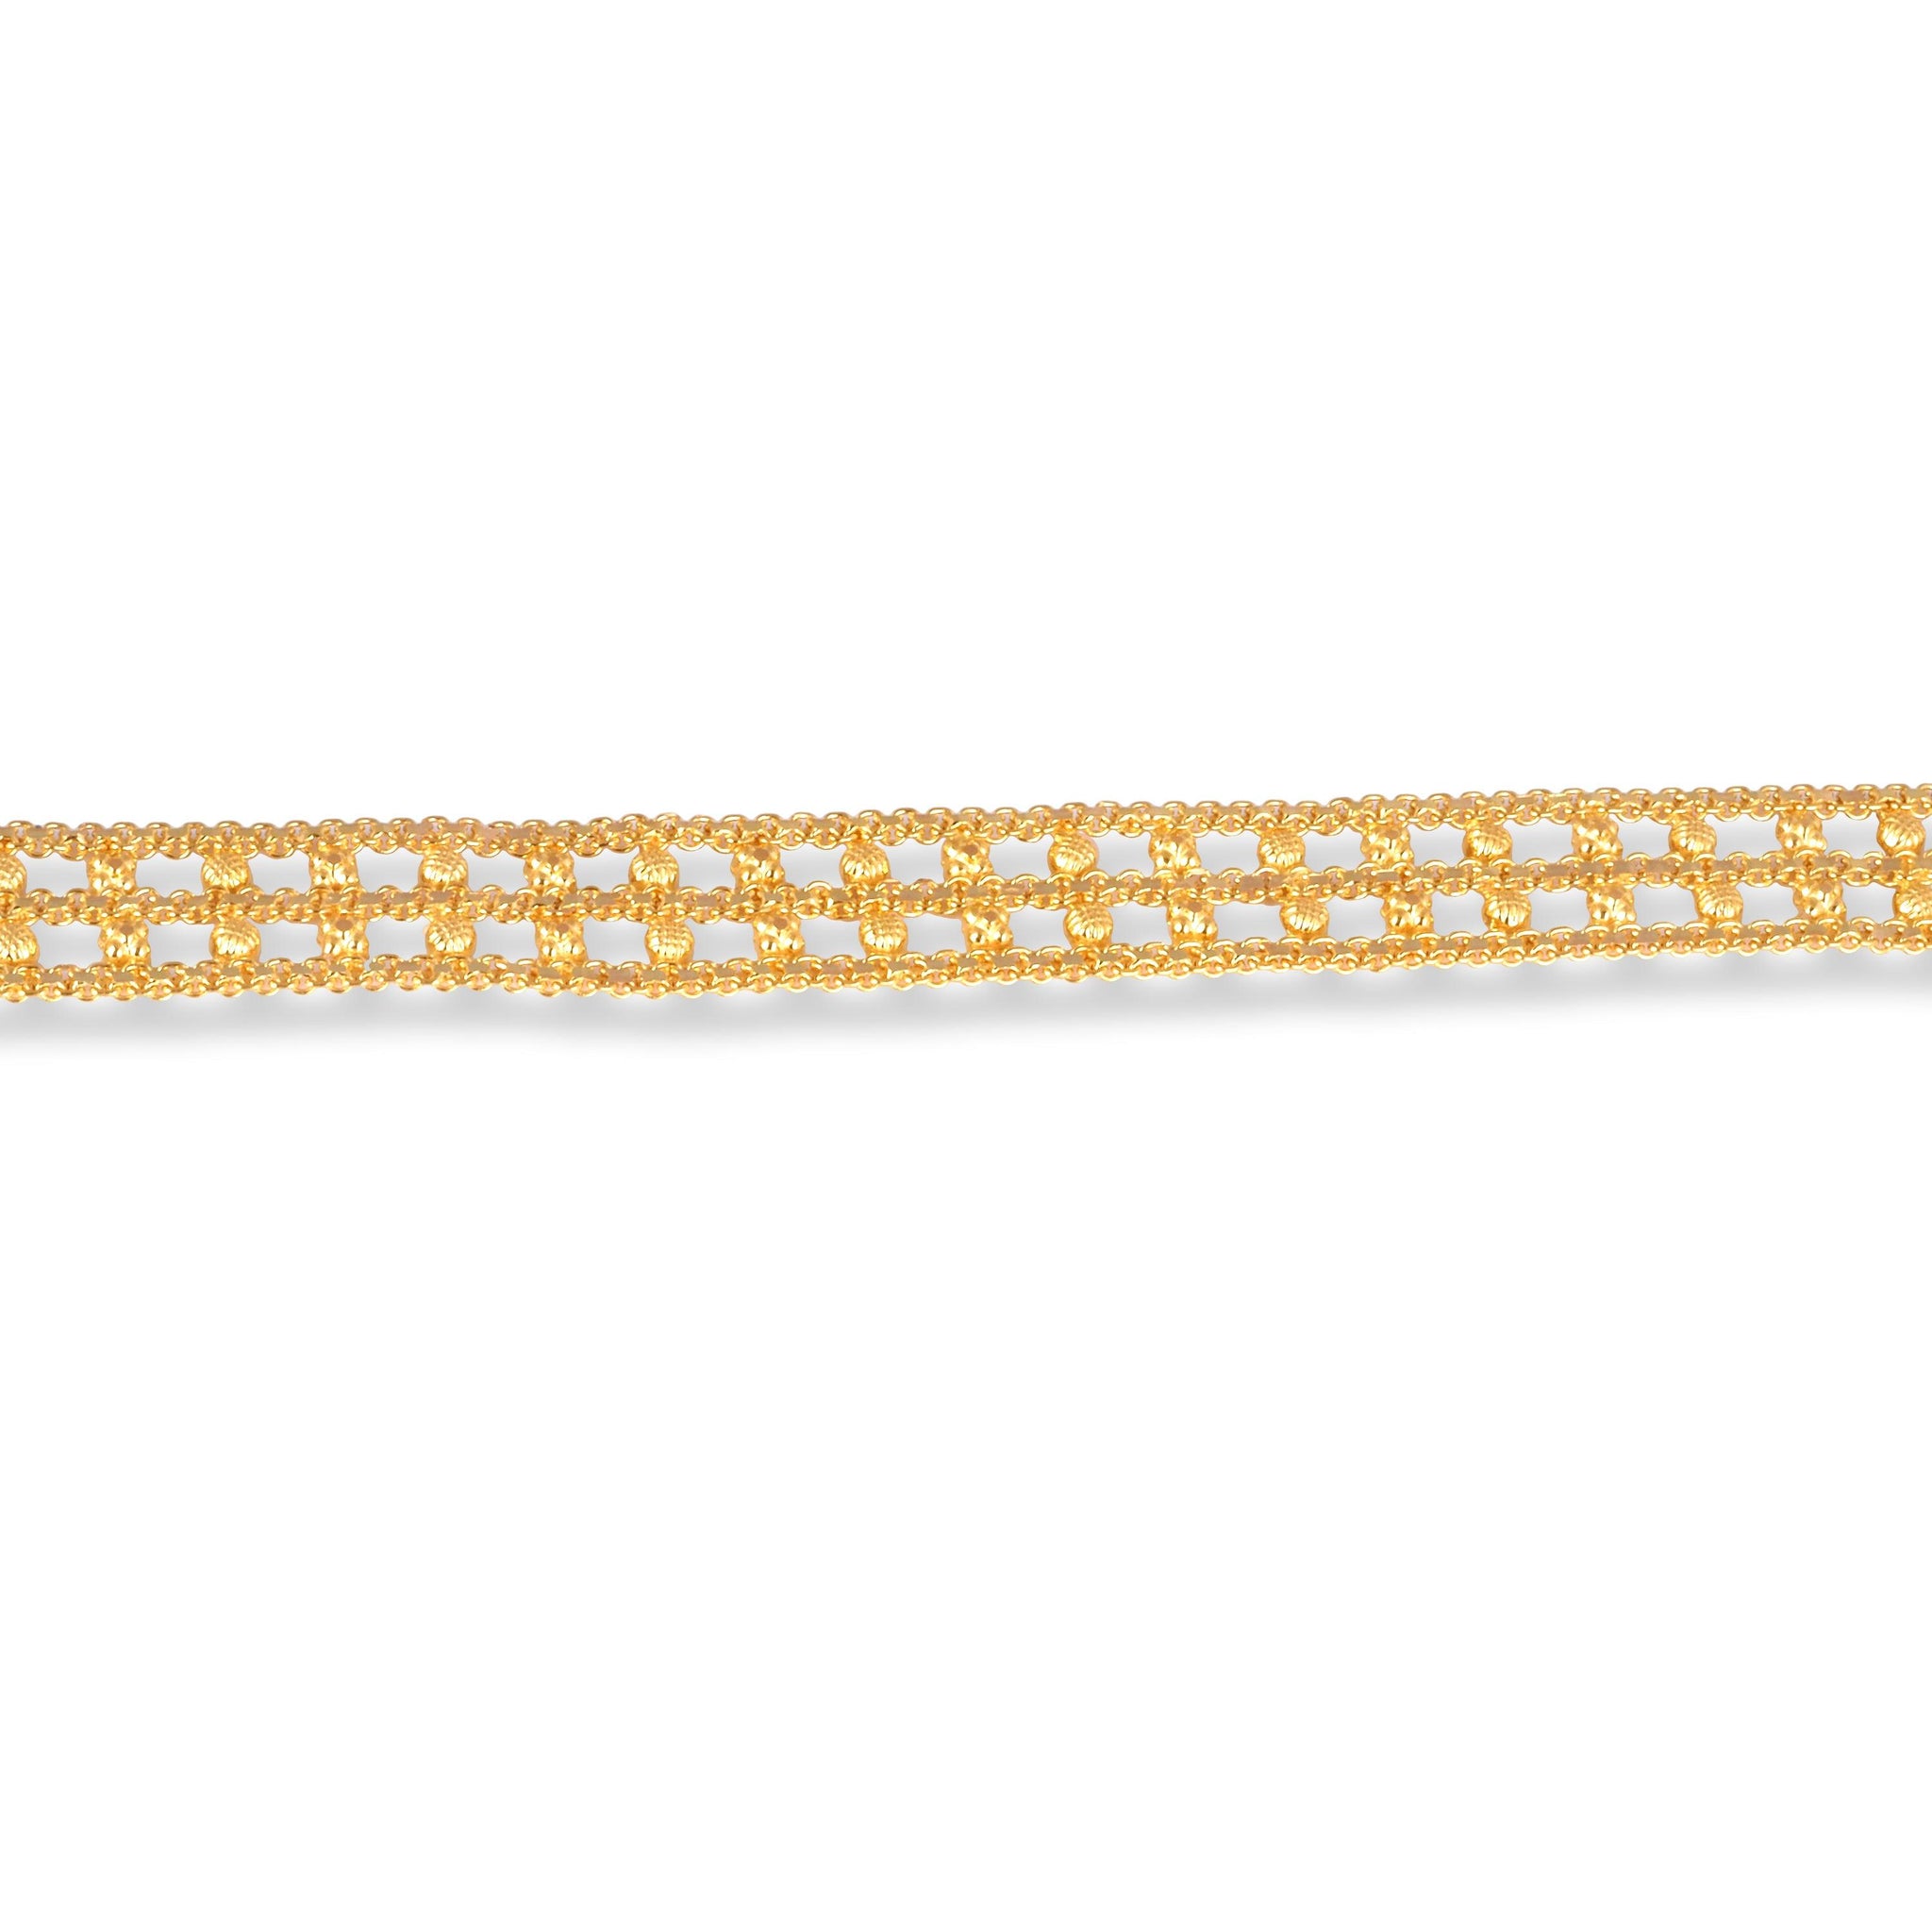 22ct Gold Ladies Bracelet in Three Row Design with U Hook Clasp LBR-7418